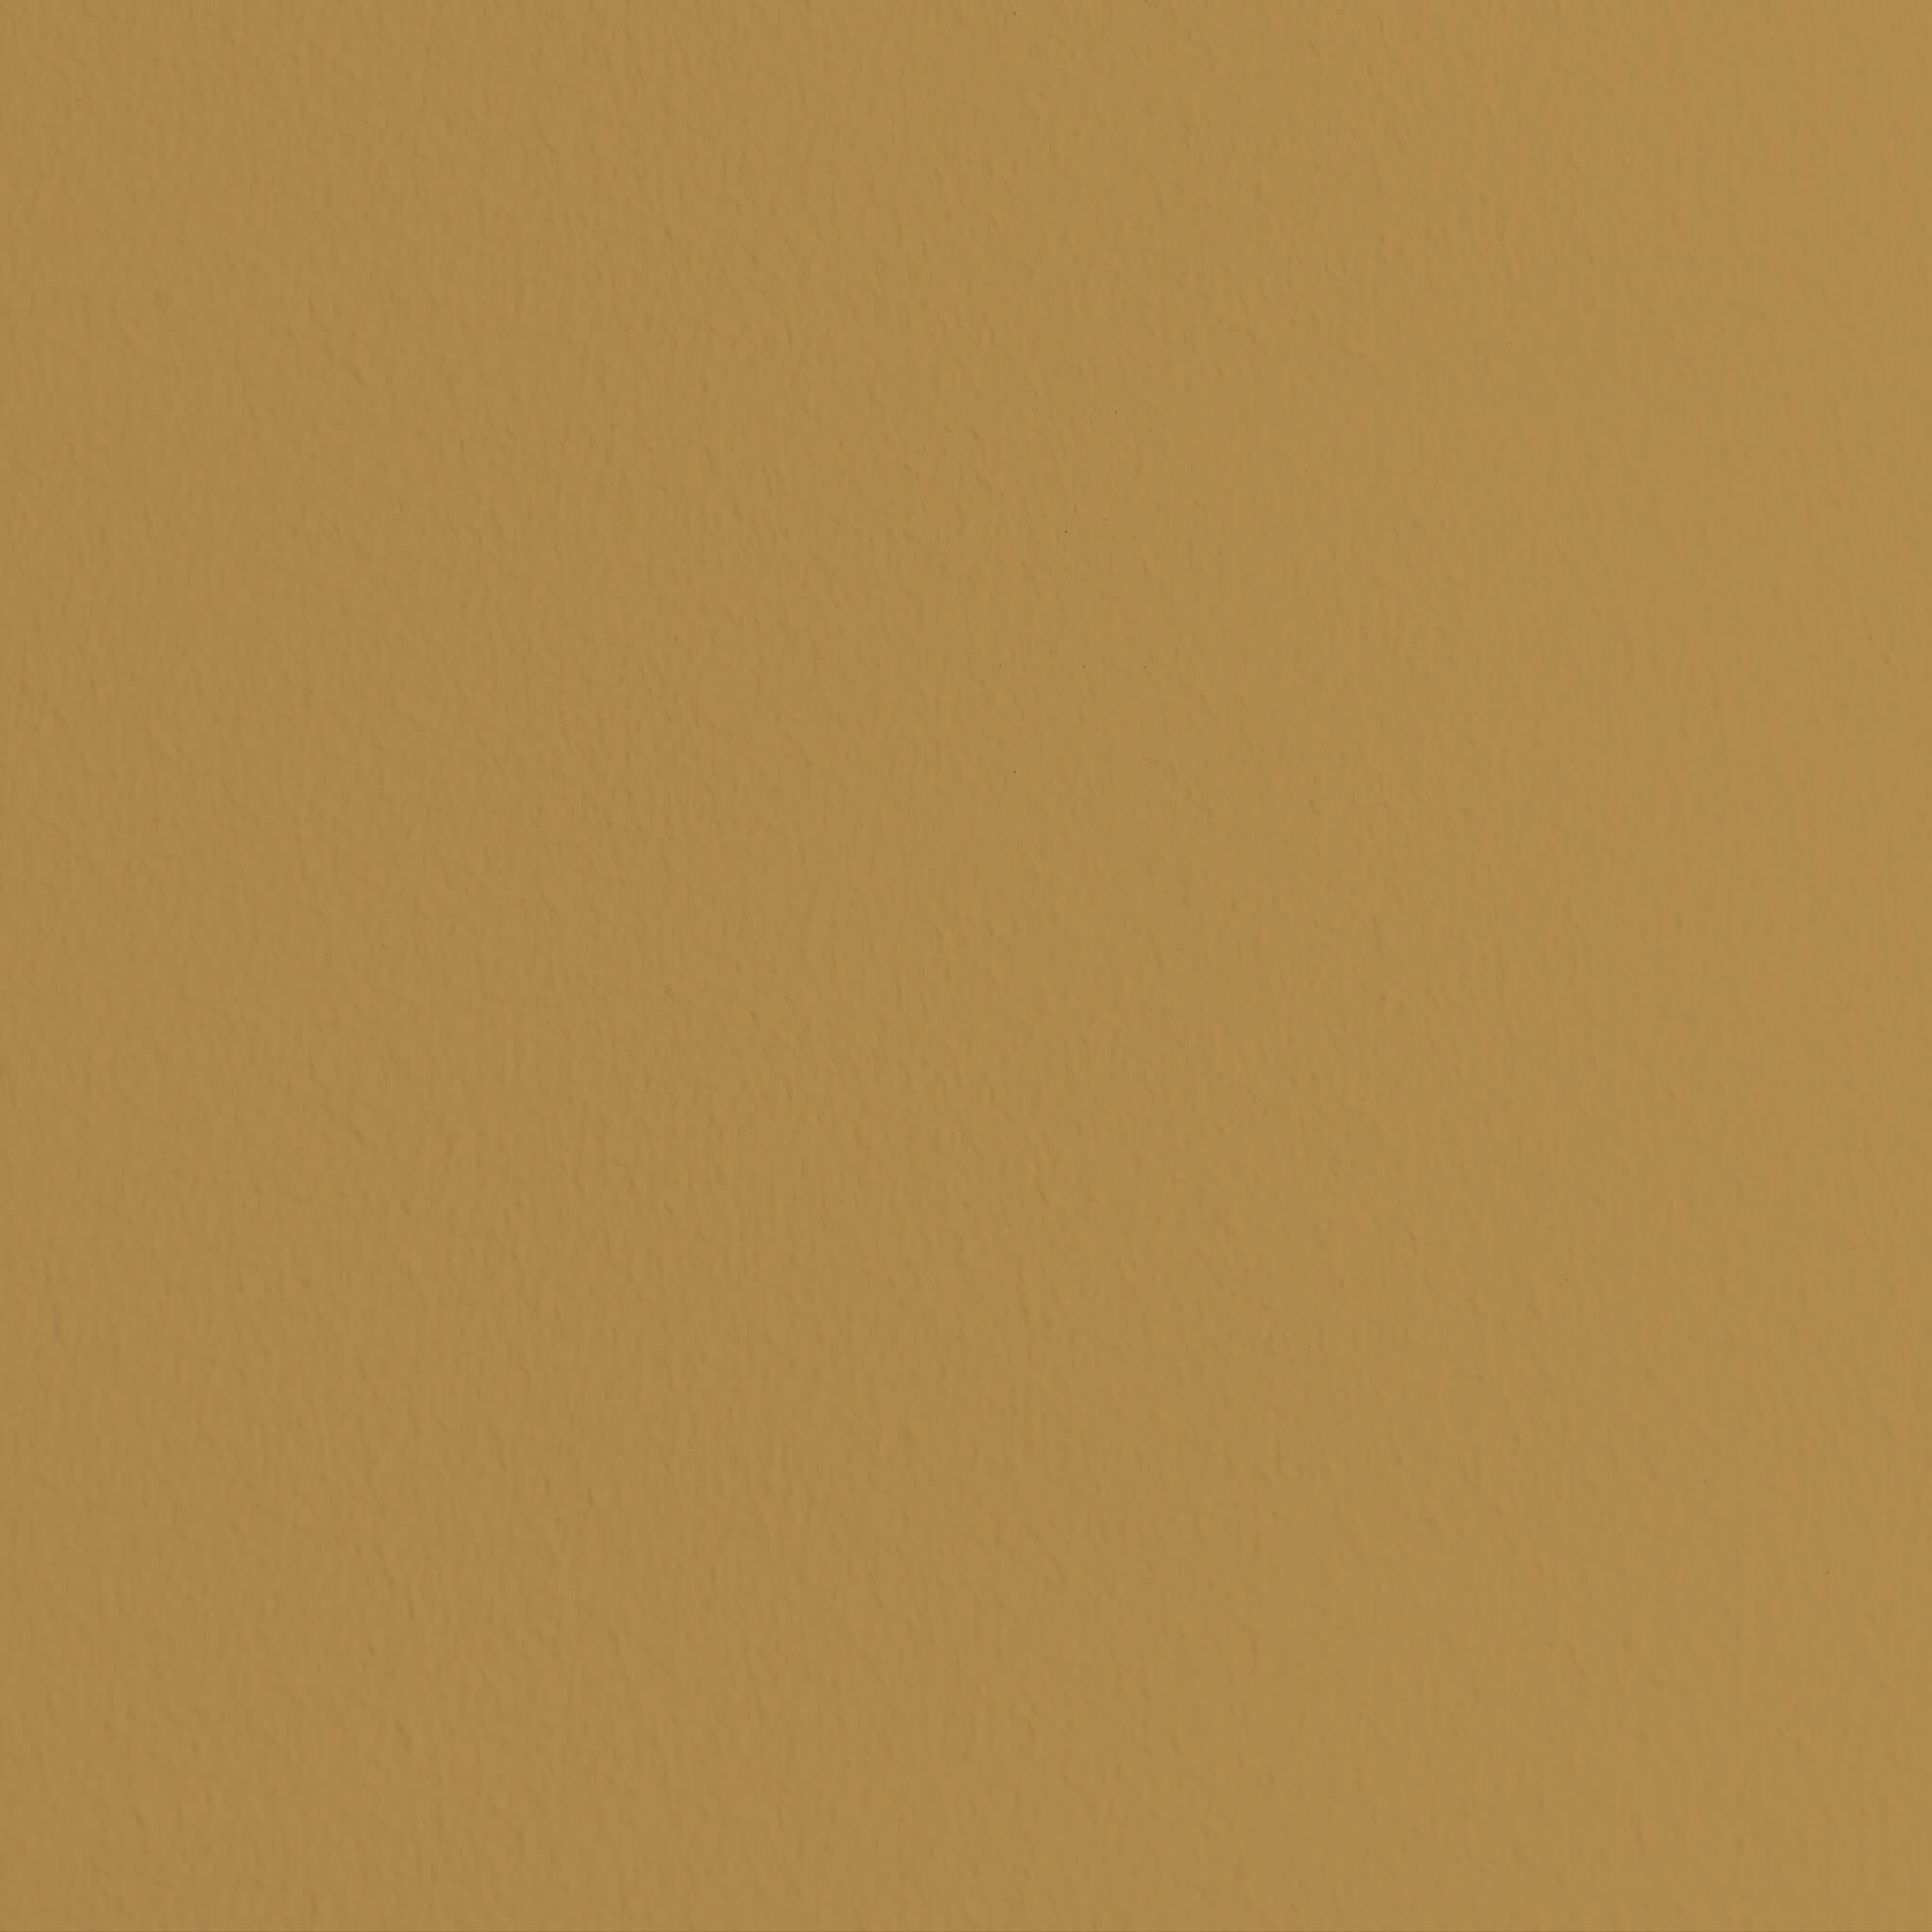 Mylands Freegrove Mustard - Marble Matt Emulsion / Wandfarbe, 2.5L